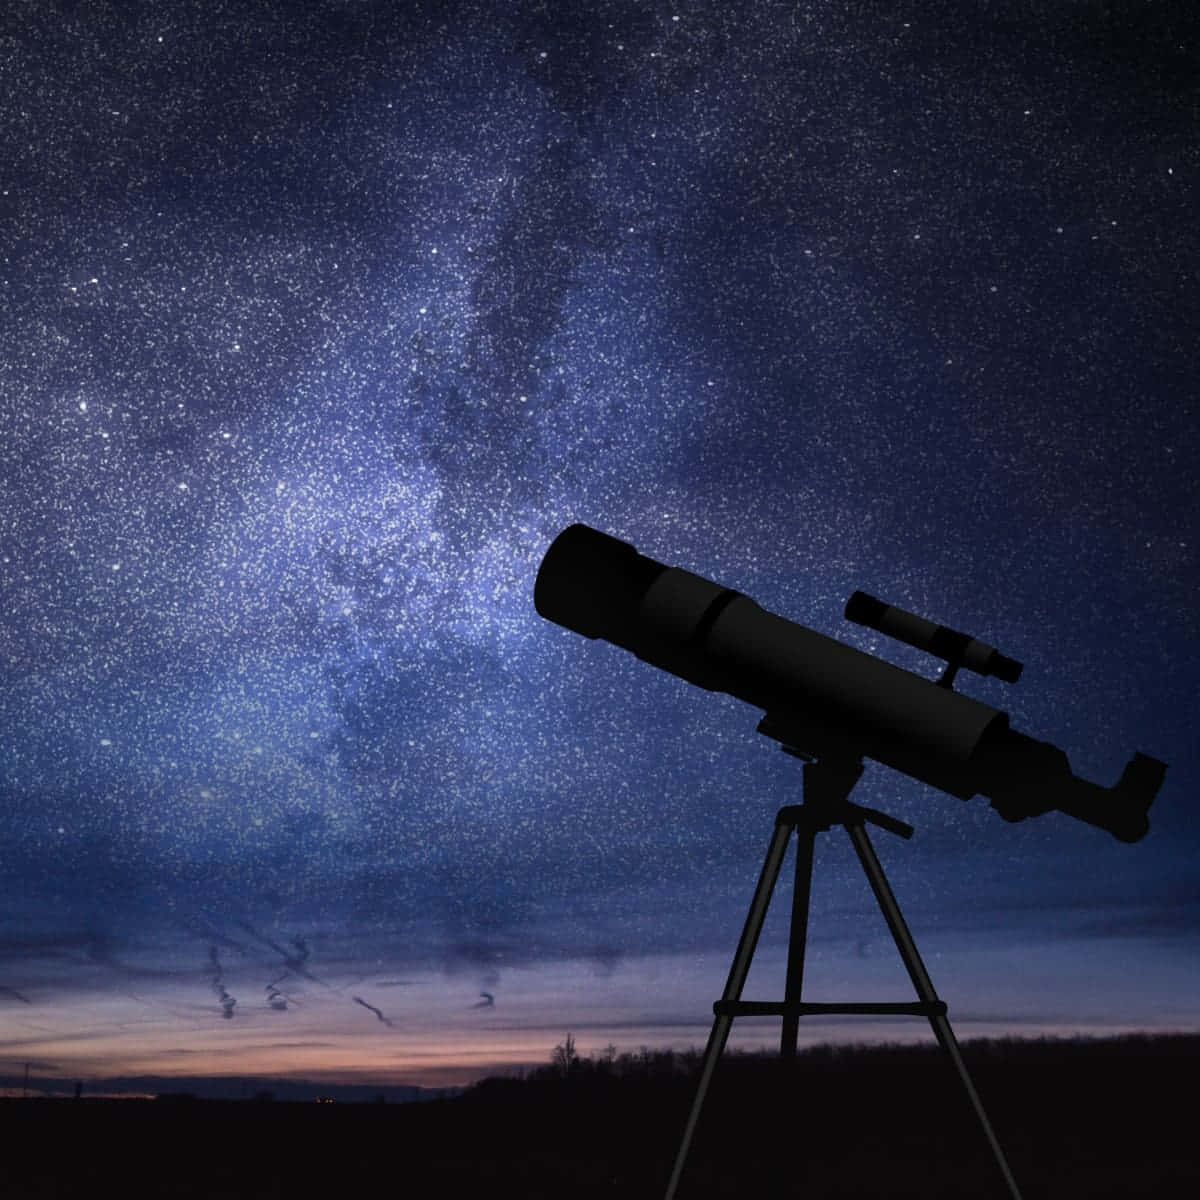 Astronomy Telescope Against Sky With Stars Wallpaper